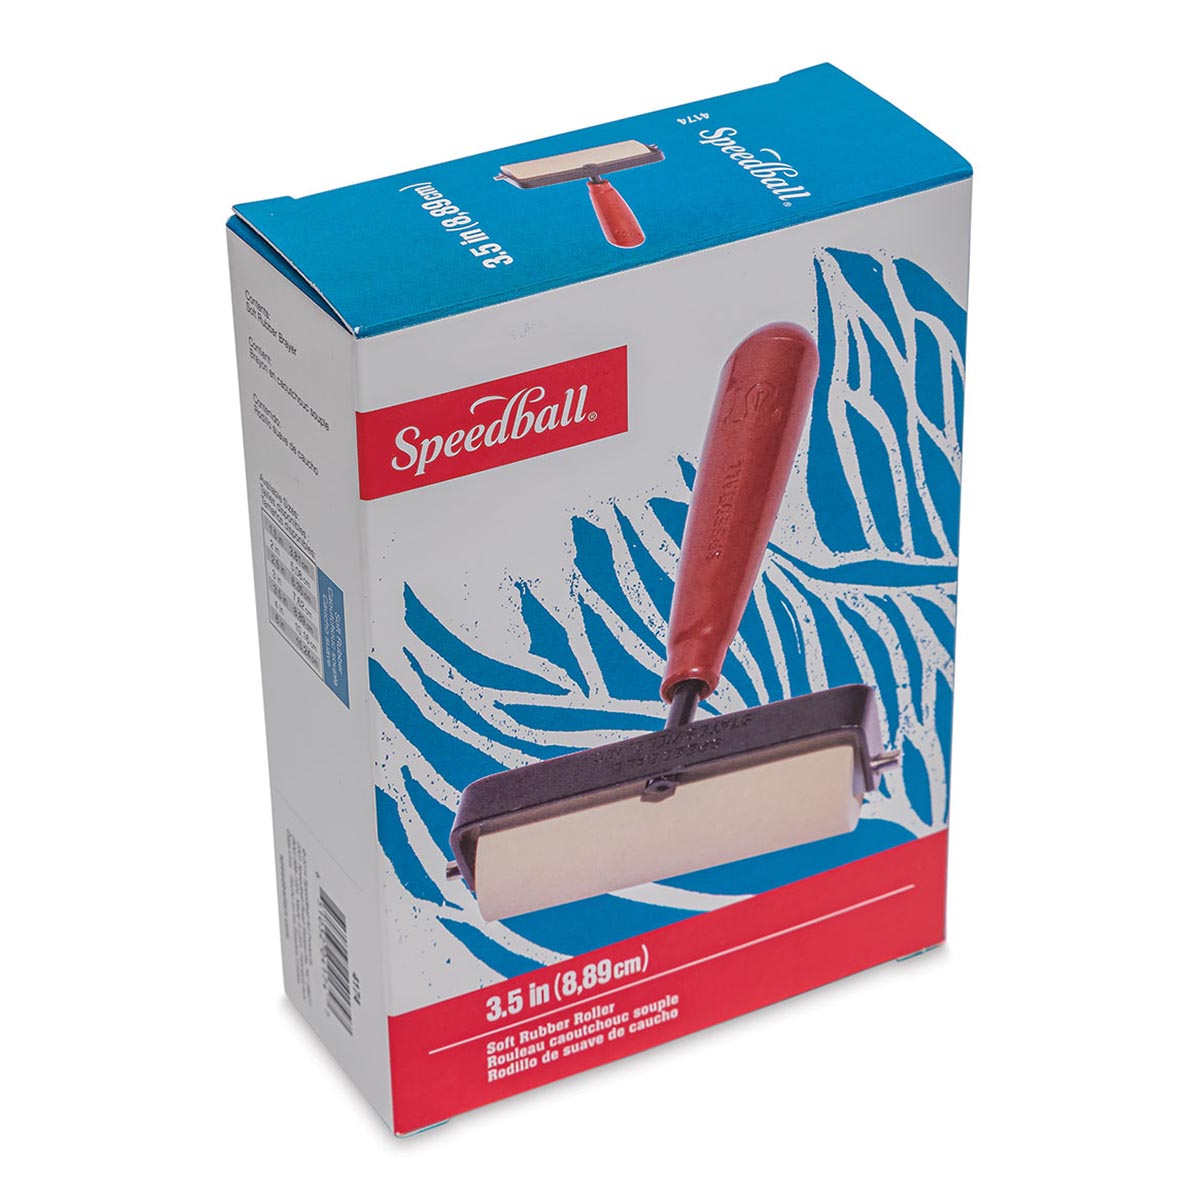 Speedball Deluxe Soft Rubber Brayer, 3-Inch